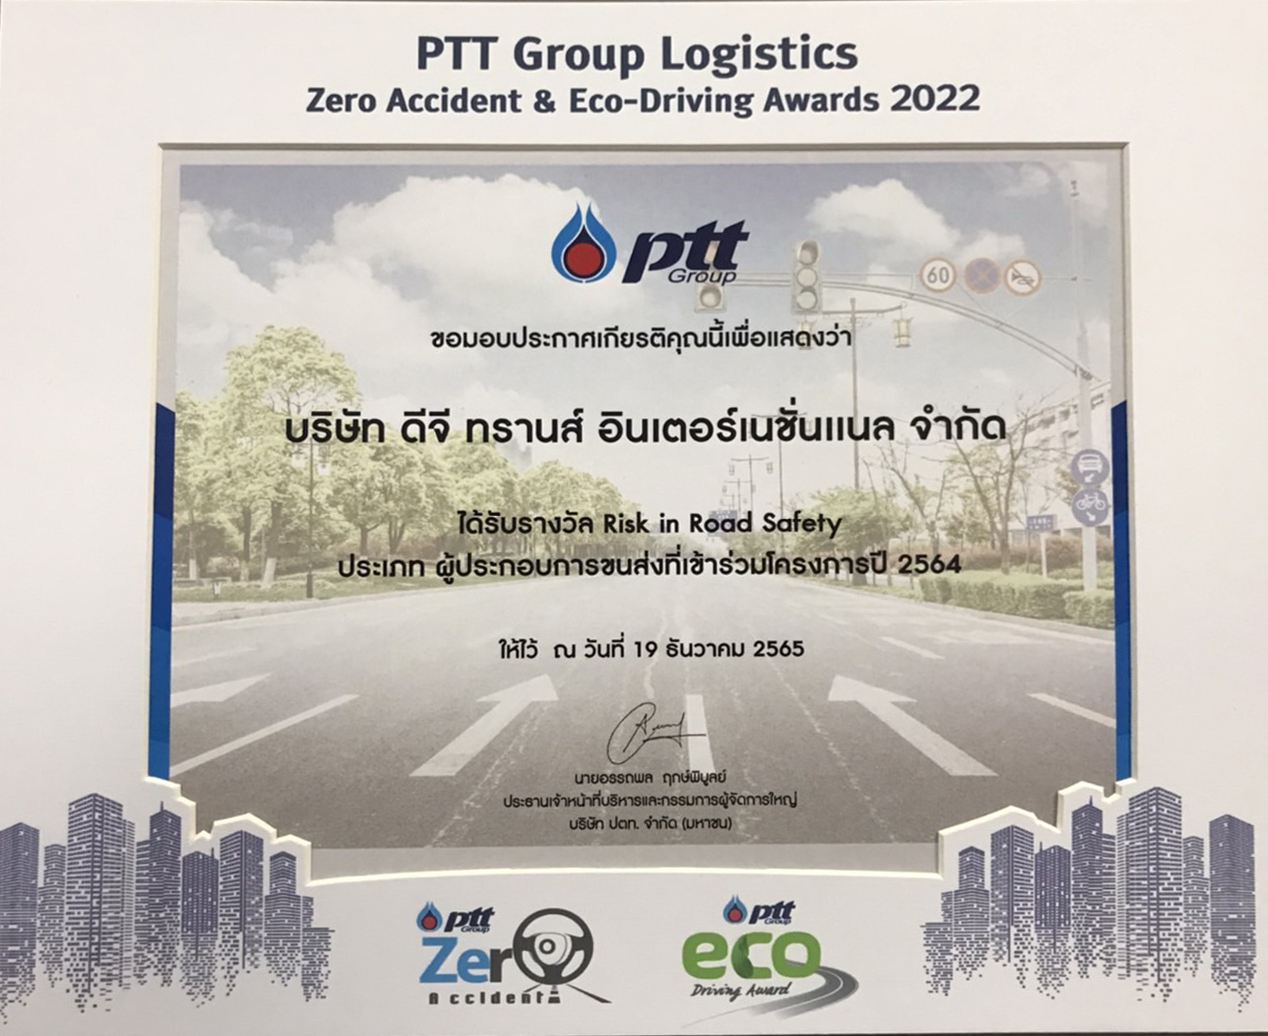 Logistics Zero Accident and Eco-Driving Awards 2022